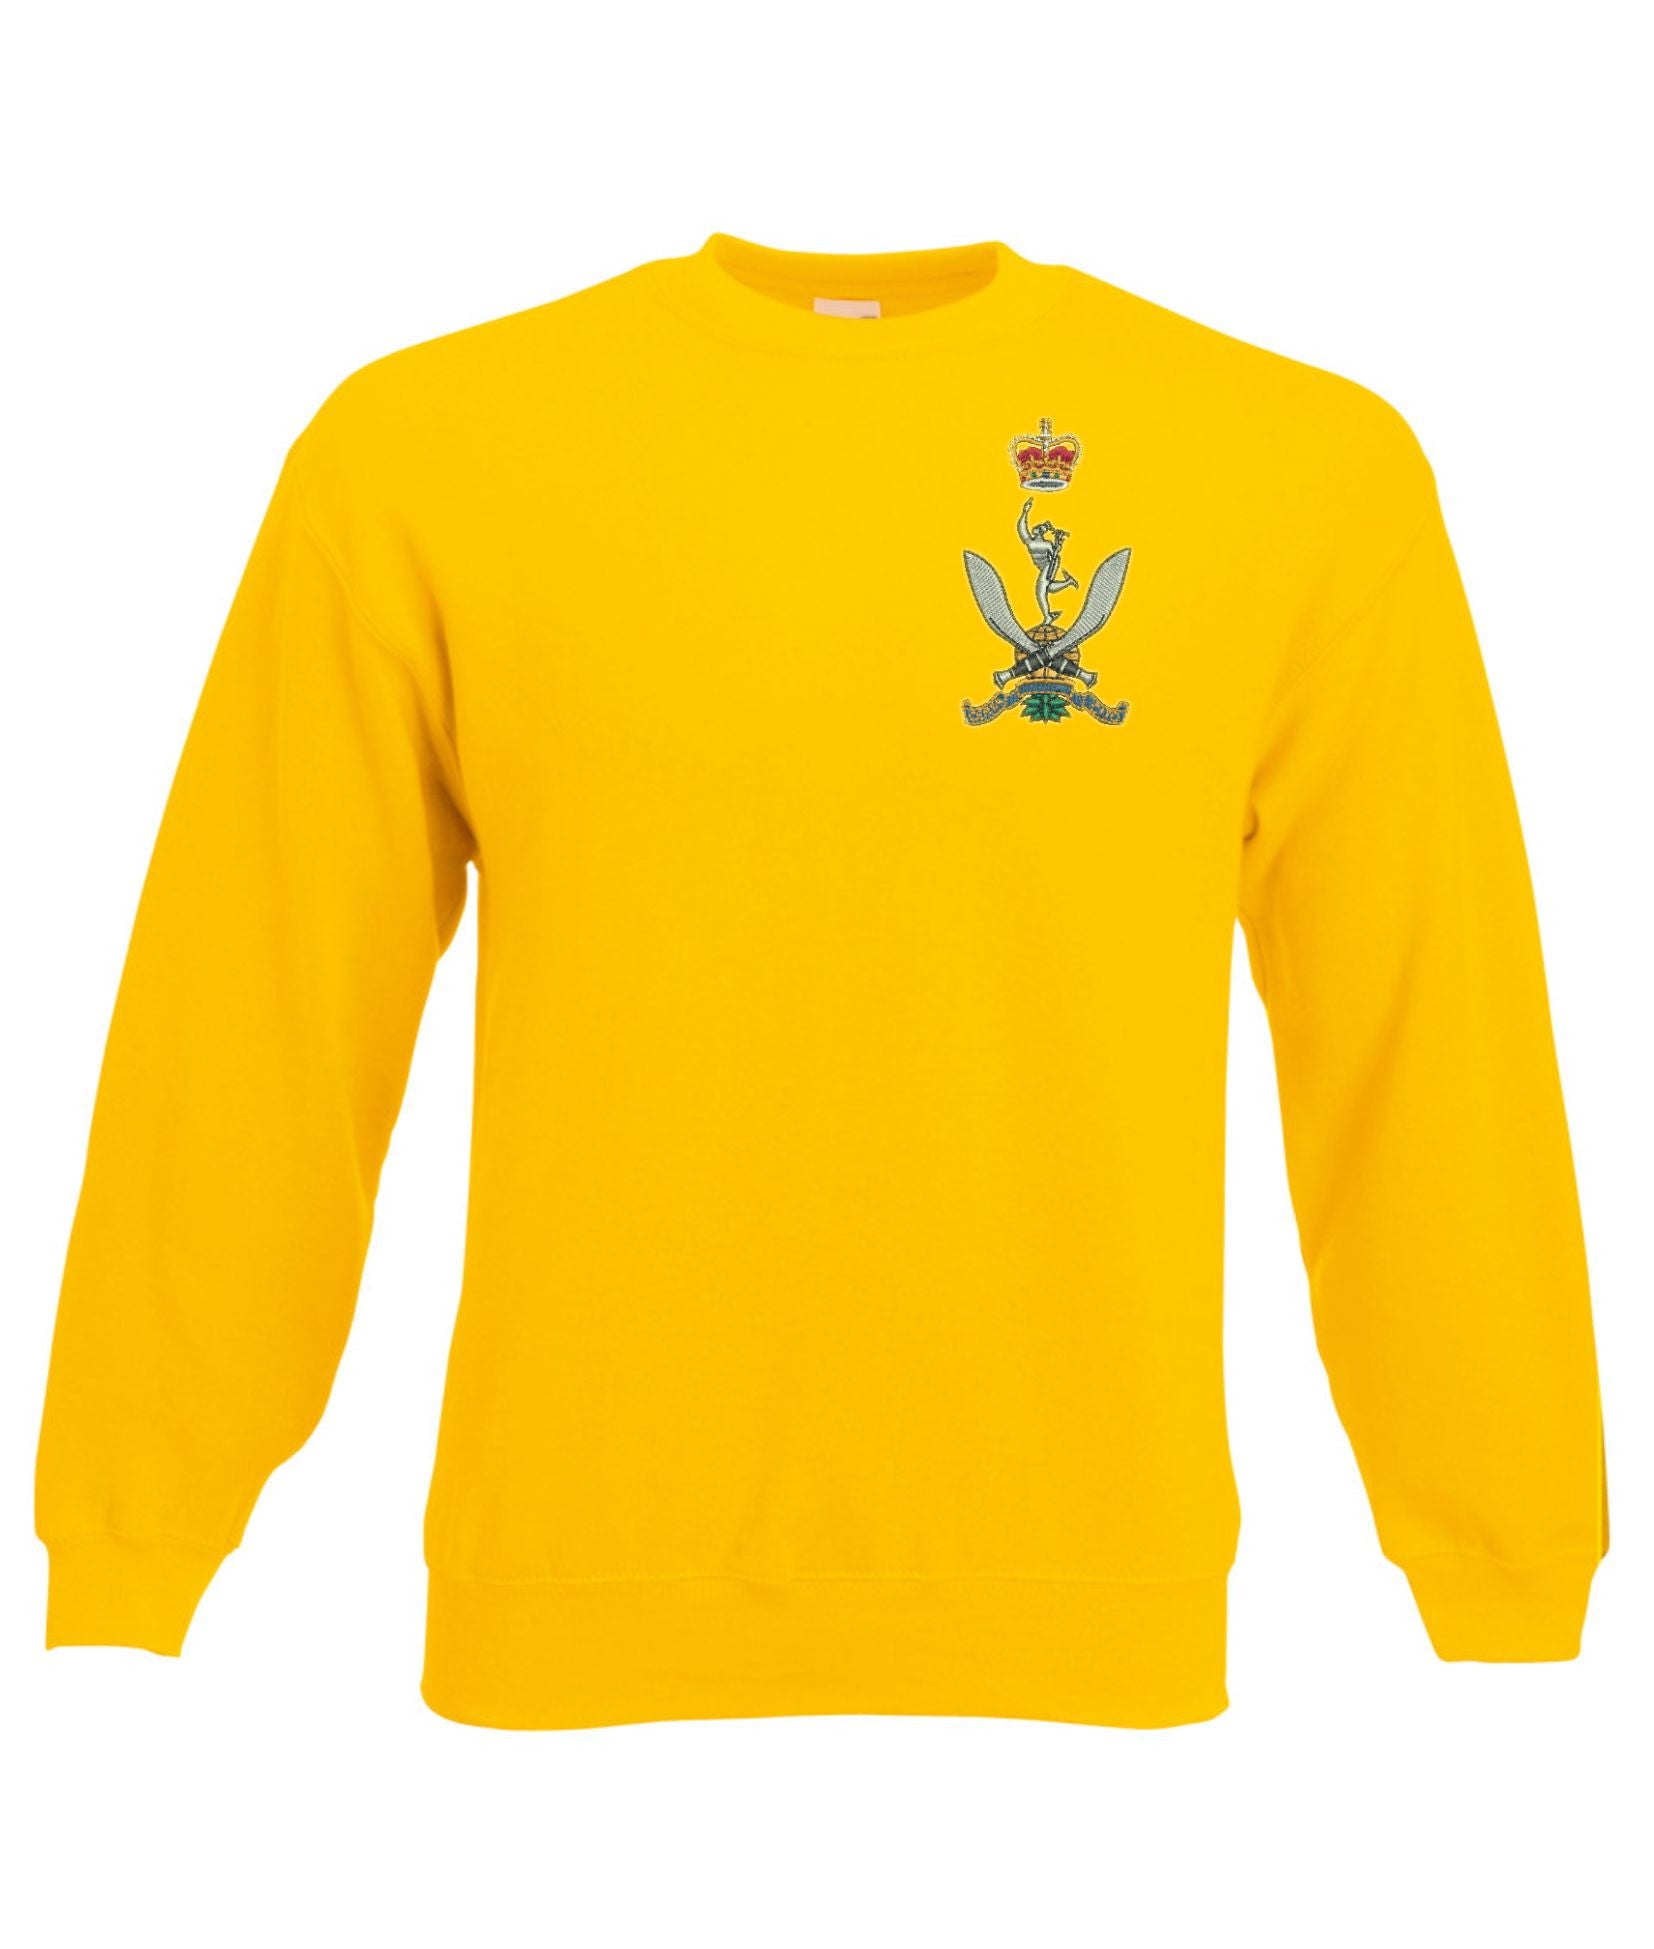 Queen's Gurkha Signals Sweatshirts